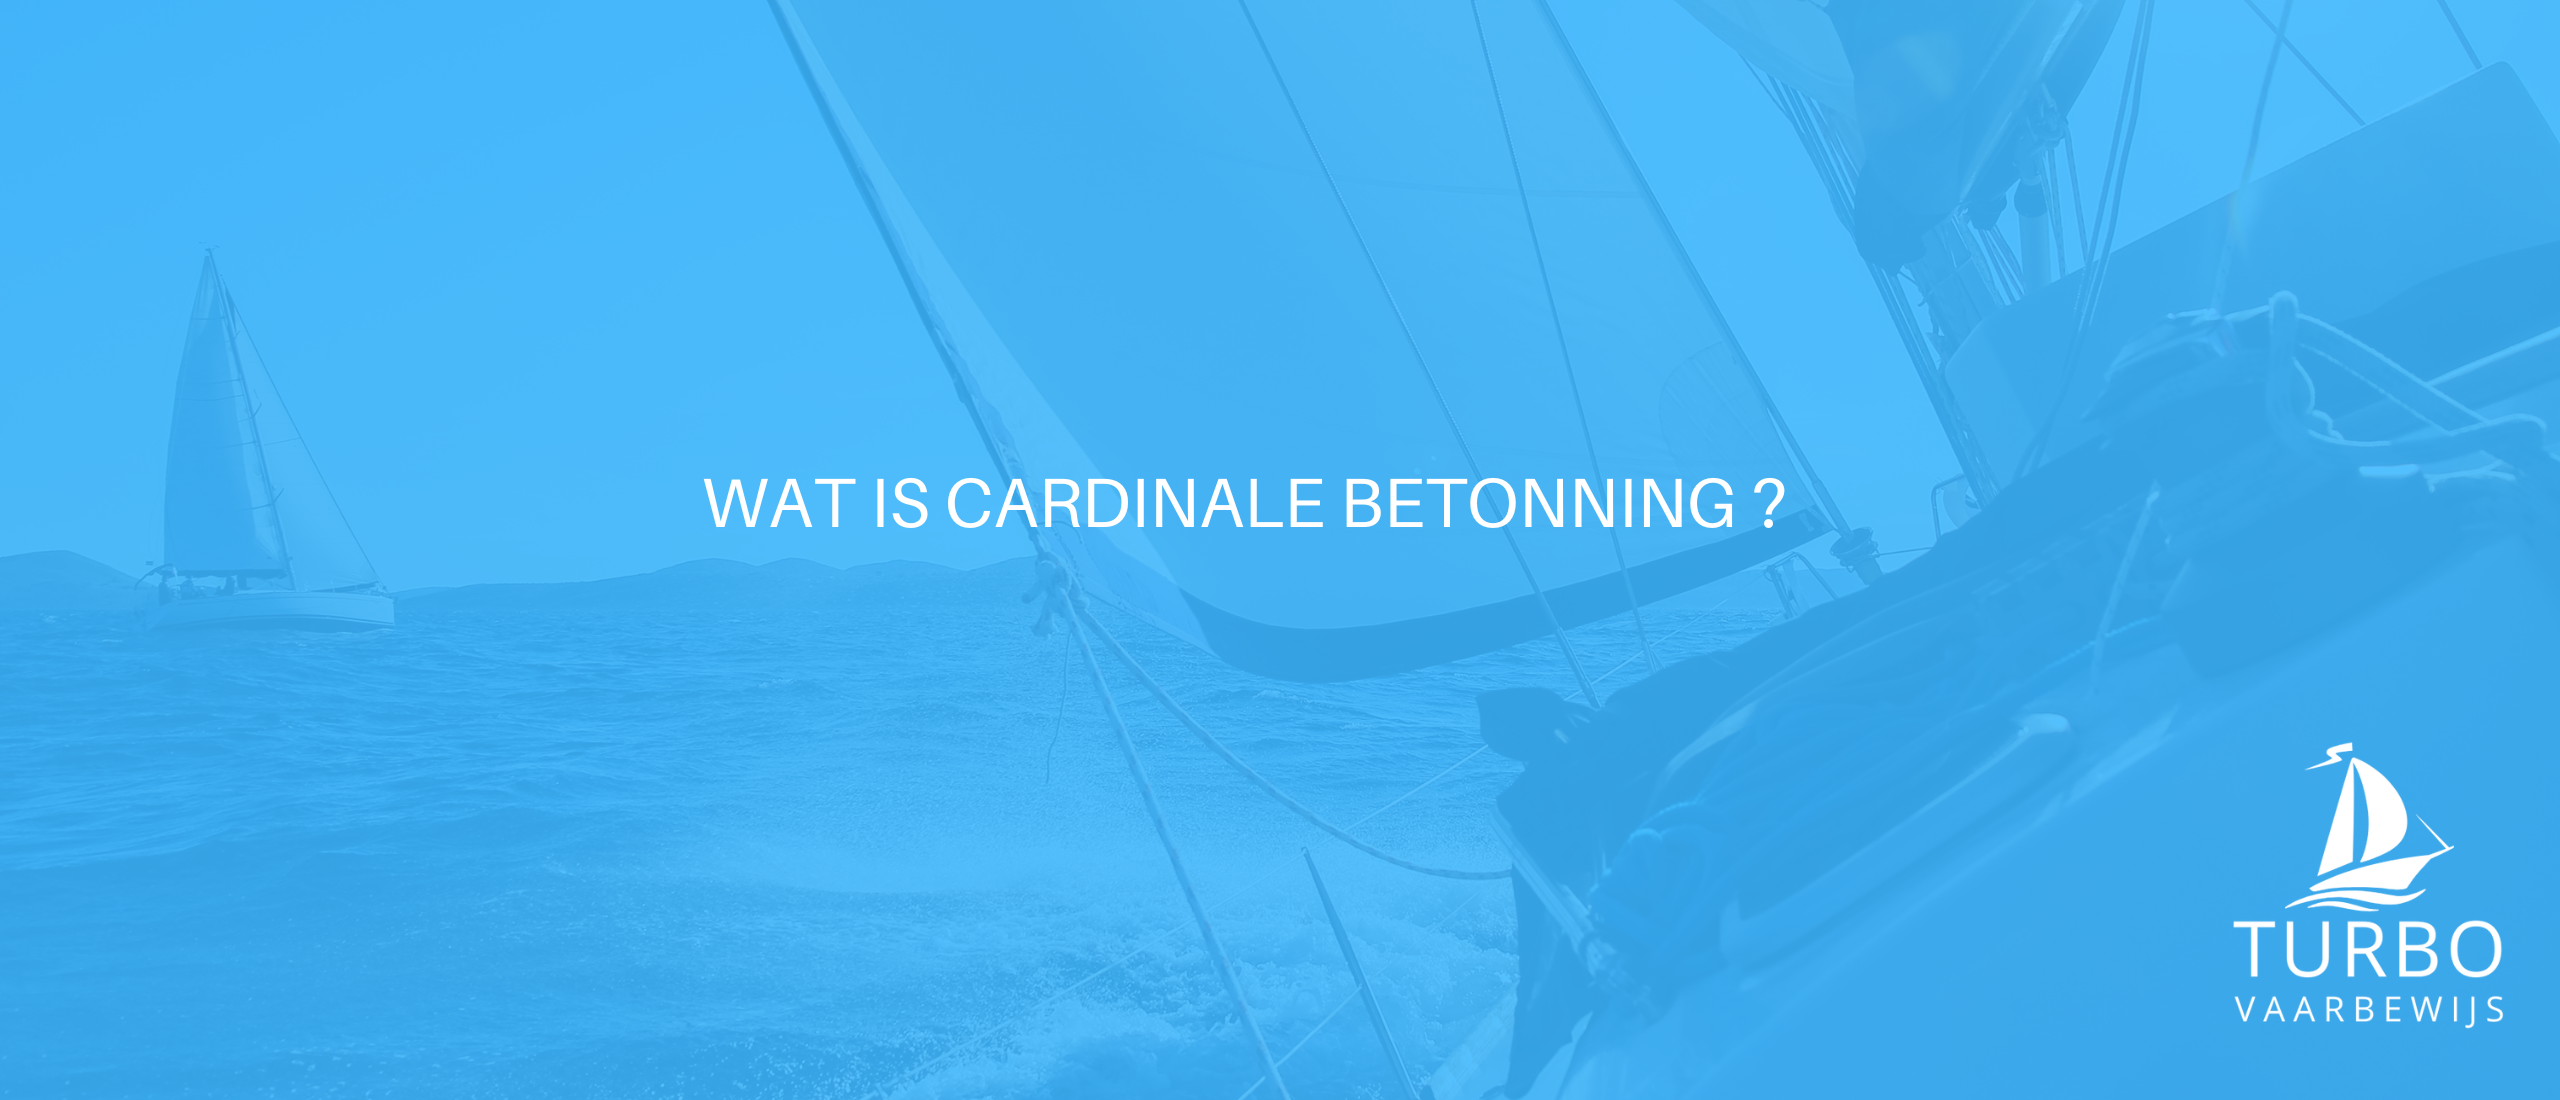 Wat is cardinale betonning?